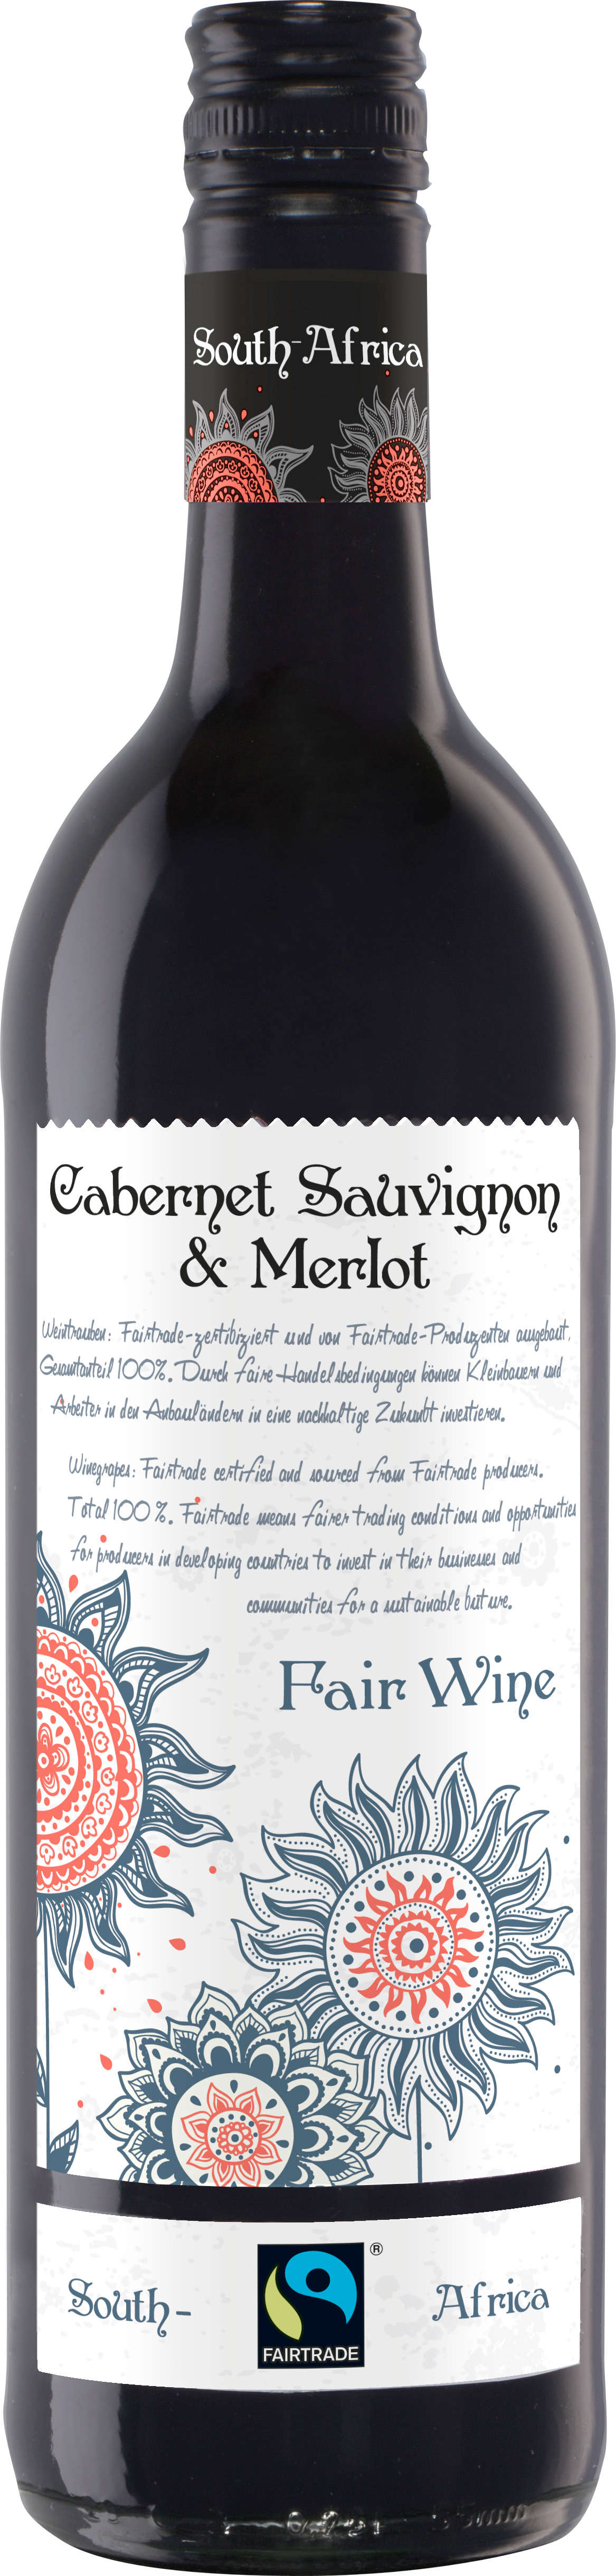 Cabernet Sauvignon & Merlot